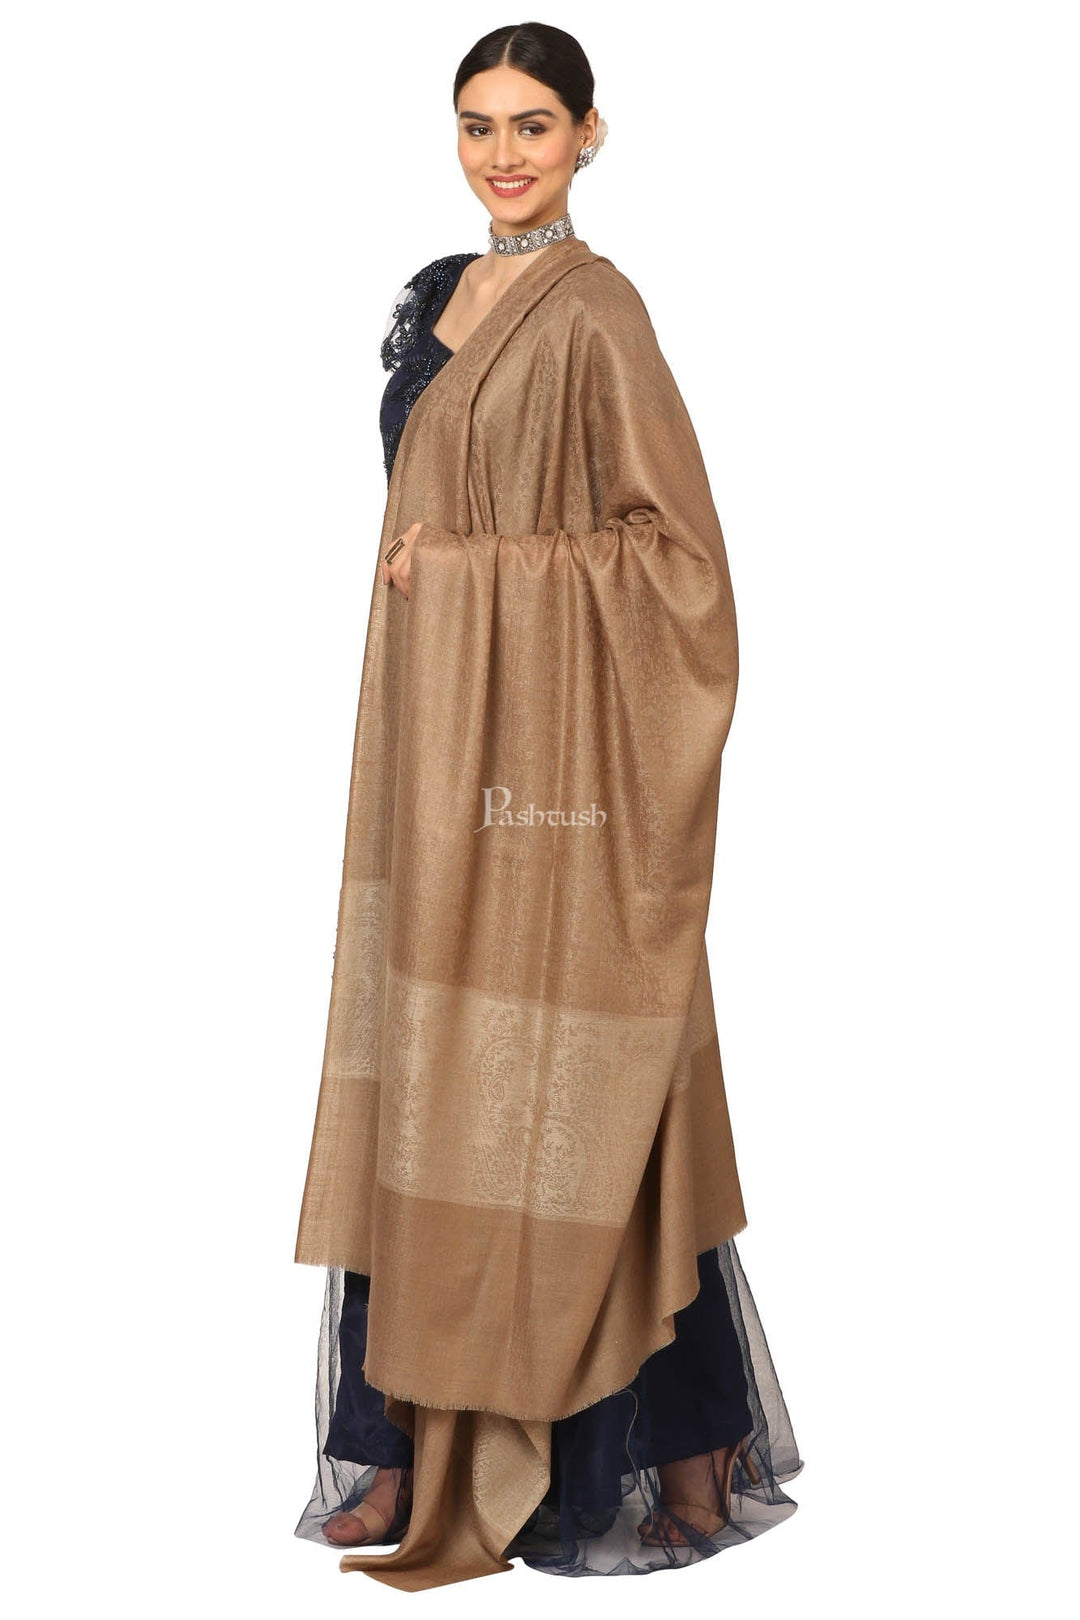 Pashtush India Womens Shawls Pashtush Women'S Wool Ultra Soft Fine Wool Cashmere Blended Shawl -  Taupe